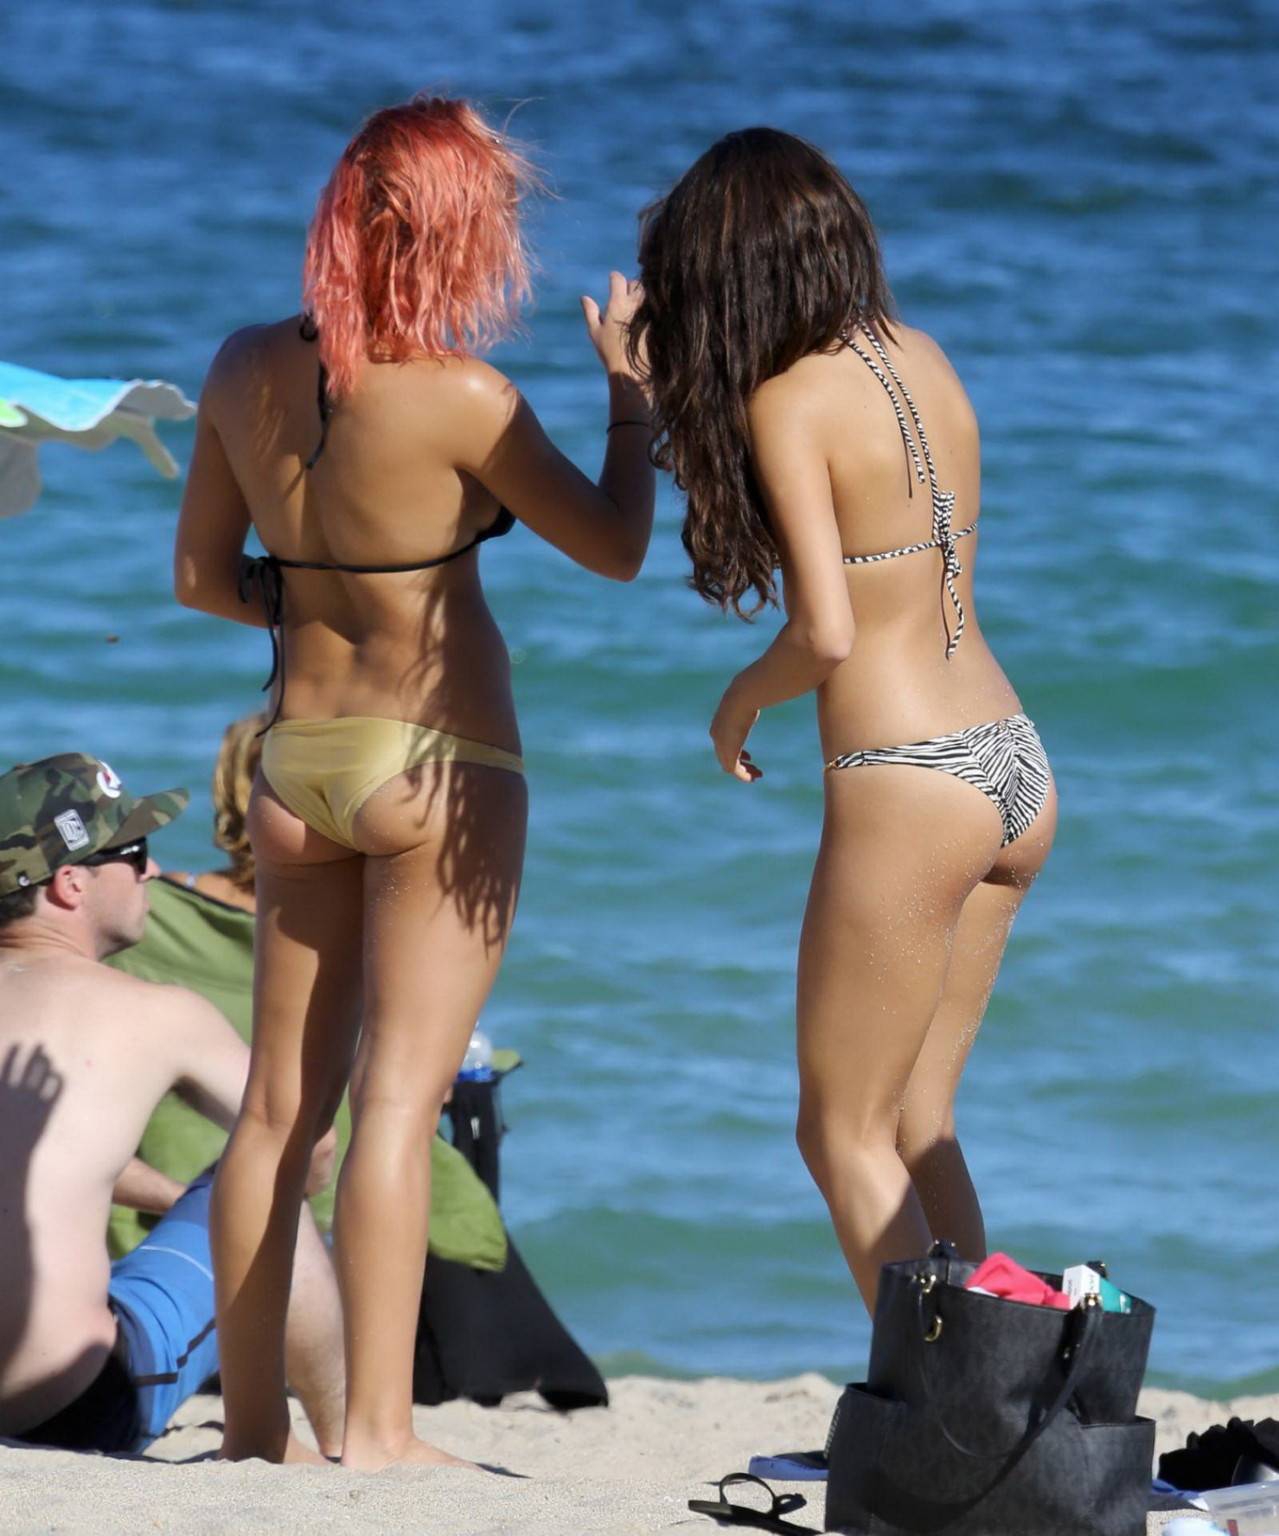 Selena gomez luciendo un diminuto bikini con estampado de cebra en la playa de miami
 #75214436